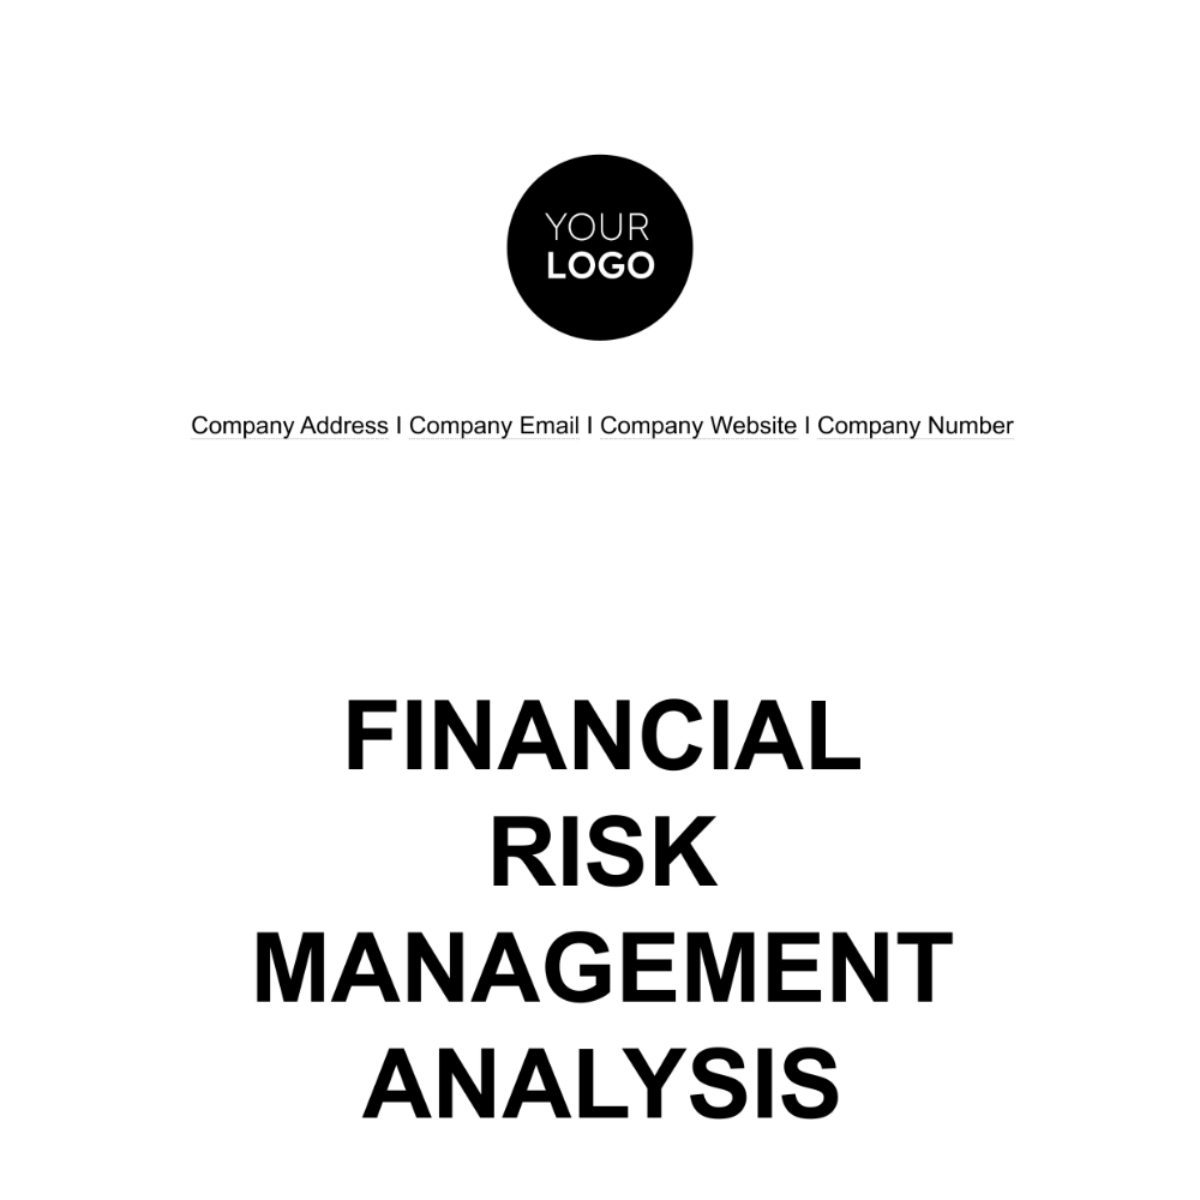 Financial Risk Management Analysis Template